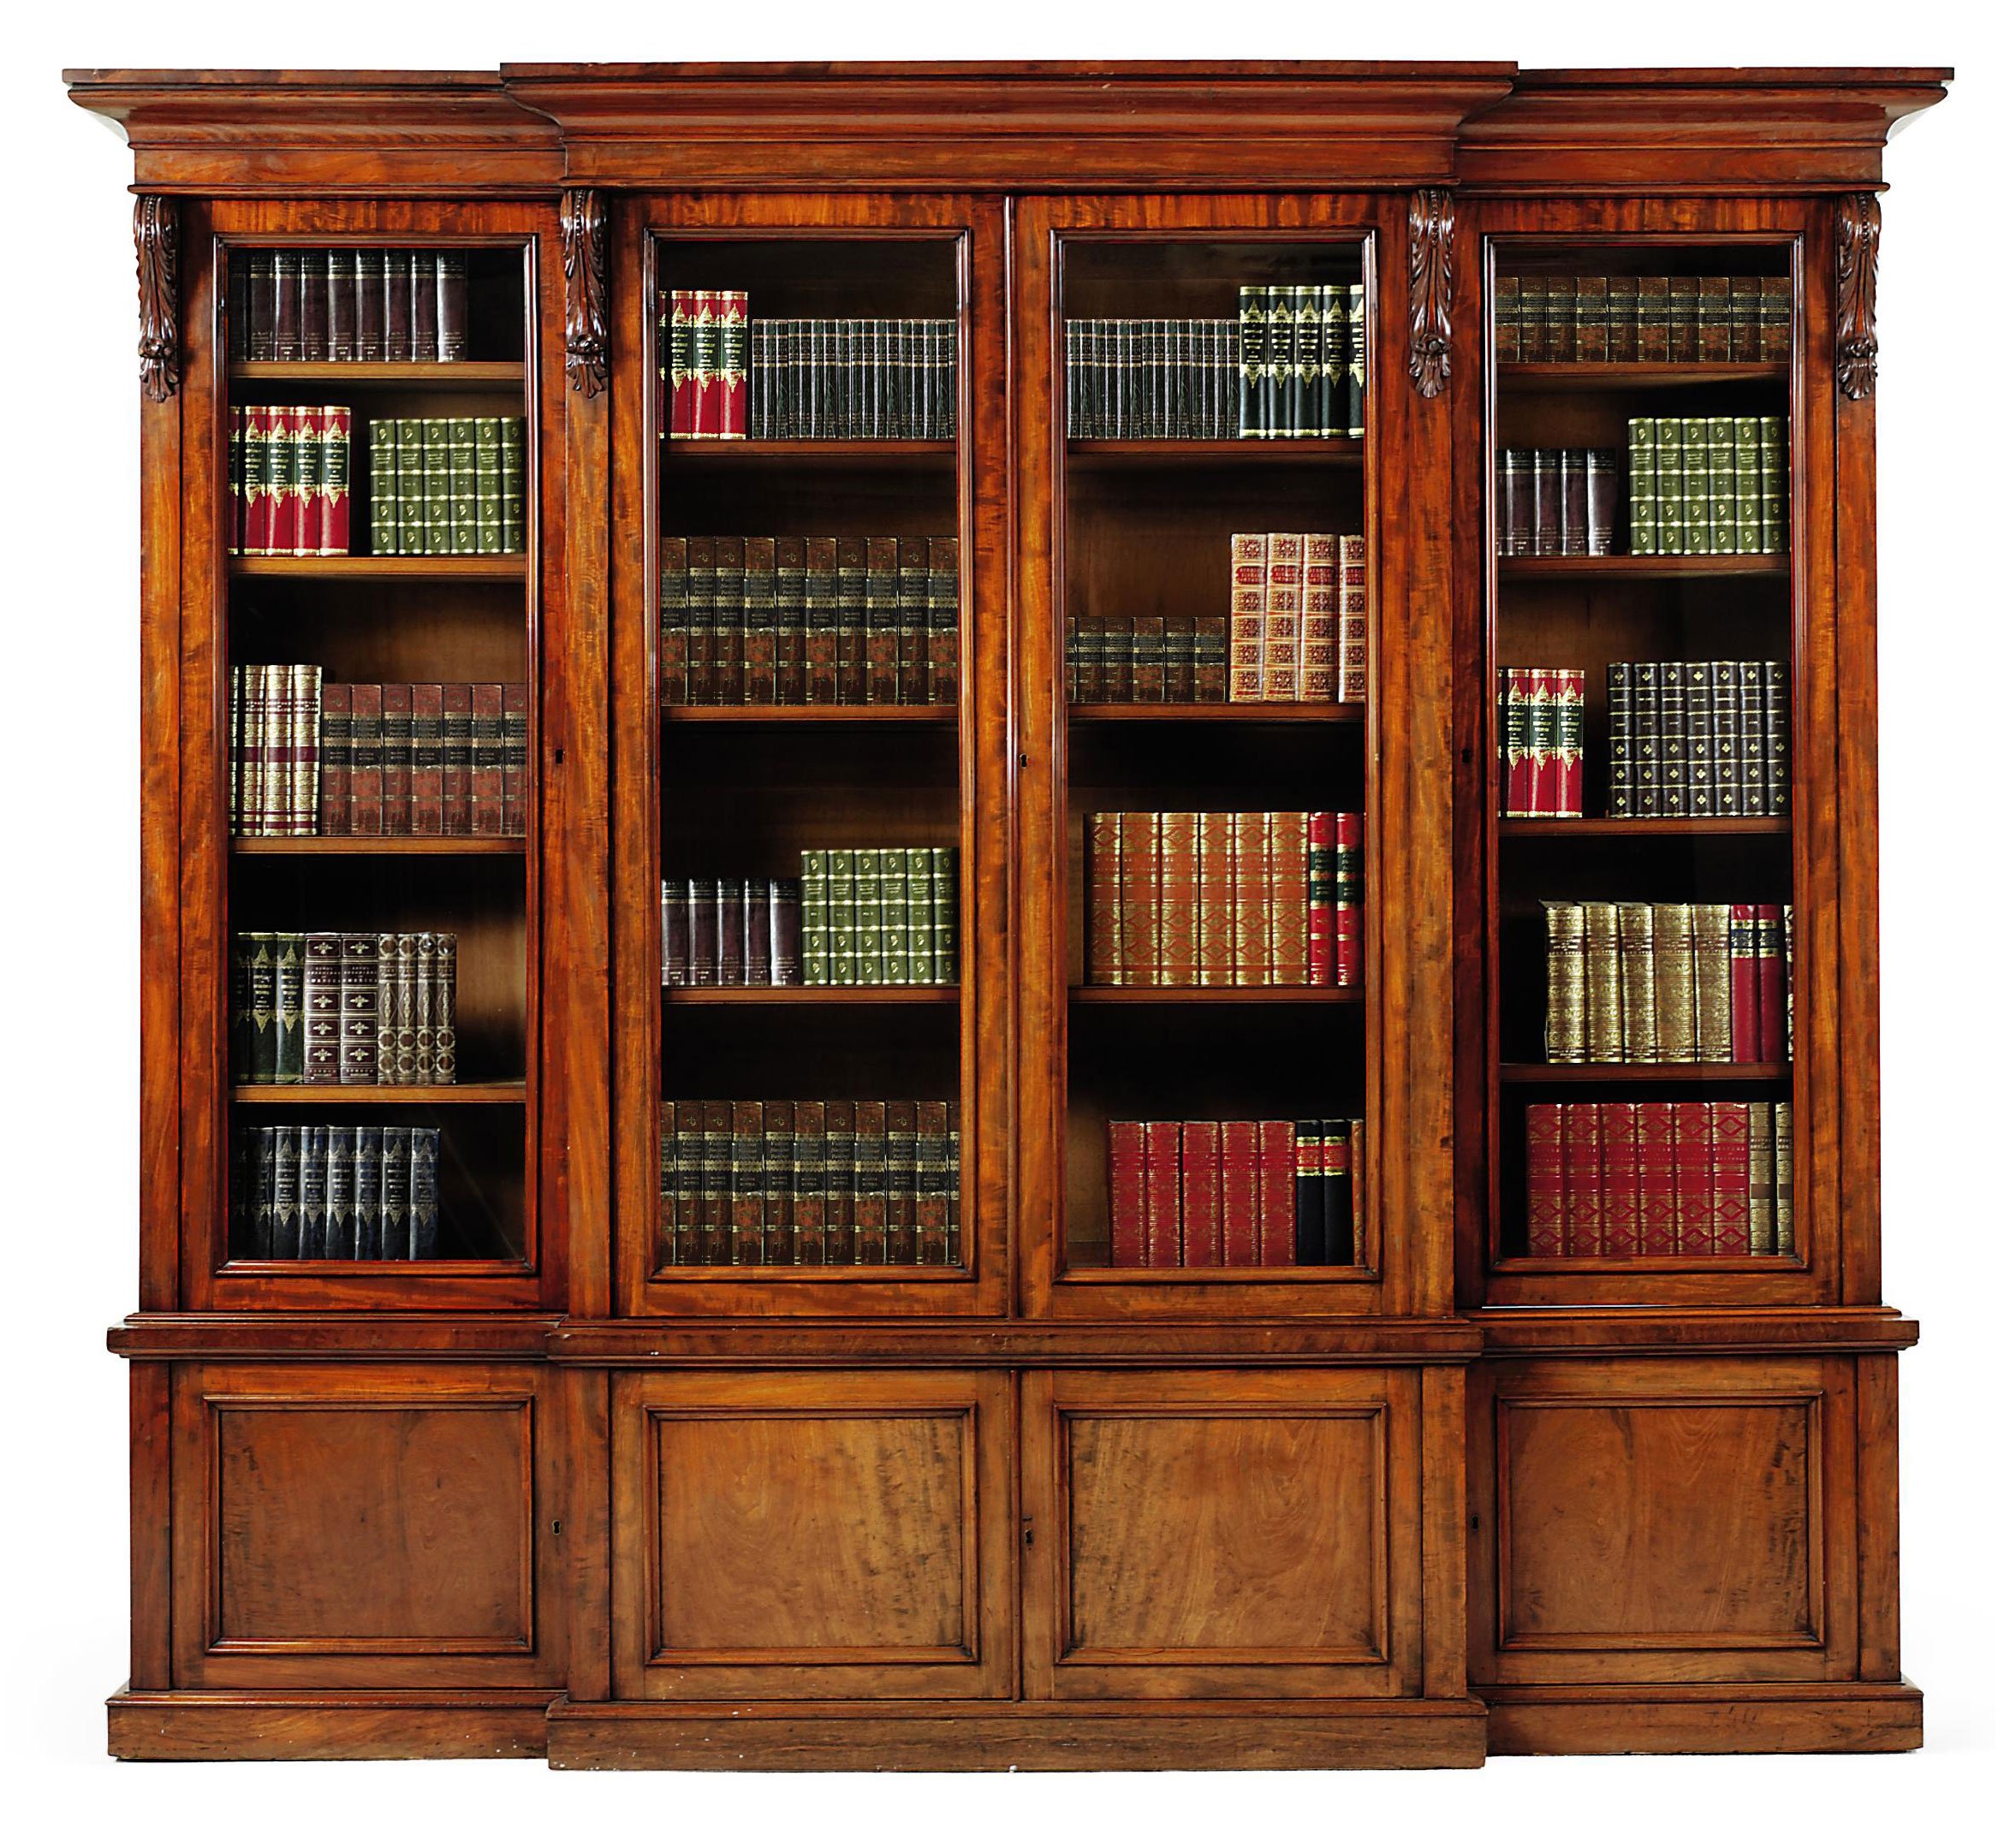 Cabinet pages. Книжный шкаф Ангстрем. Книжный шкаф Викос. Книжный шкаф Ralph Lauren Victorian Bookcase.